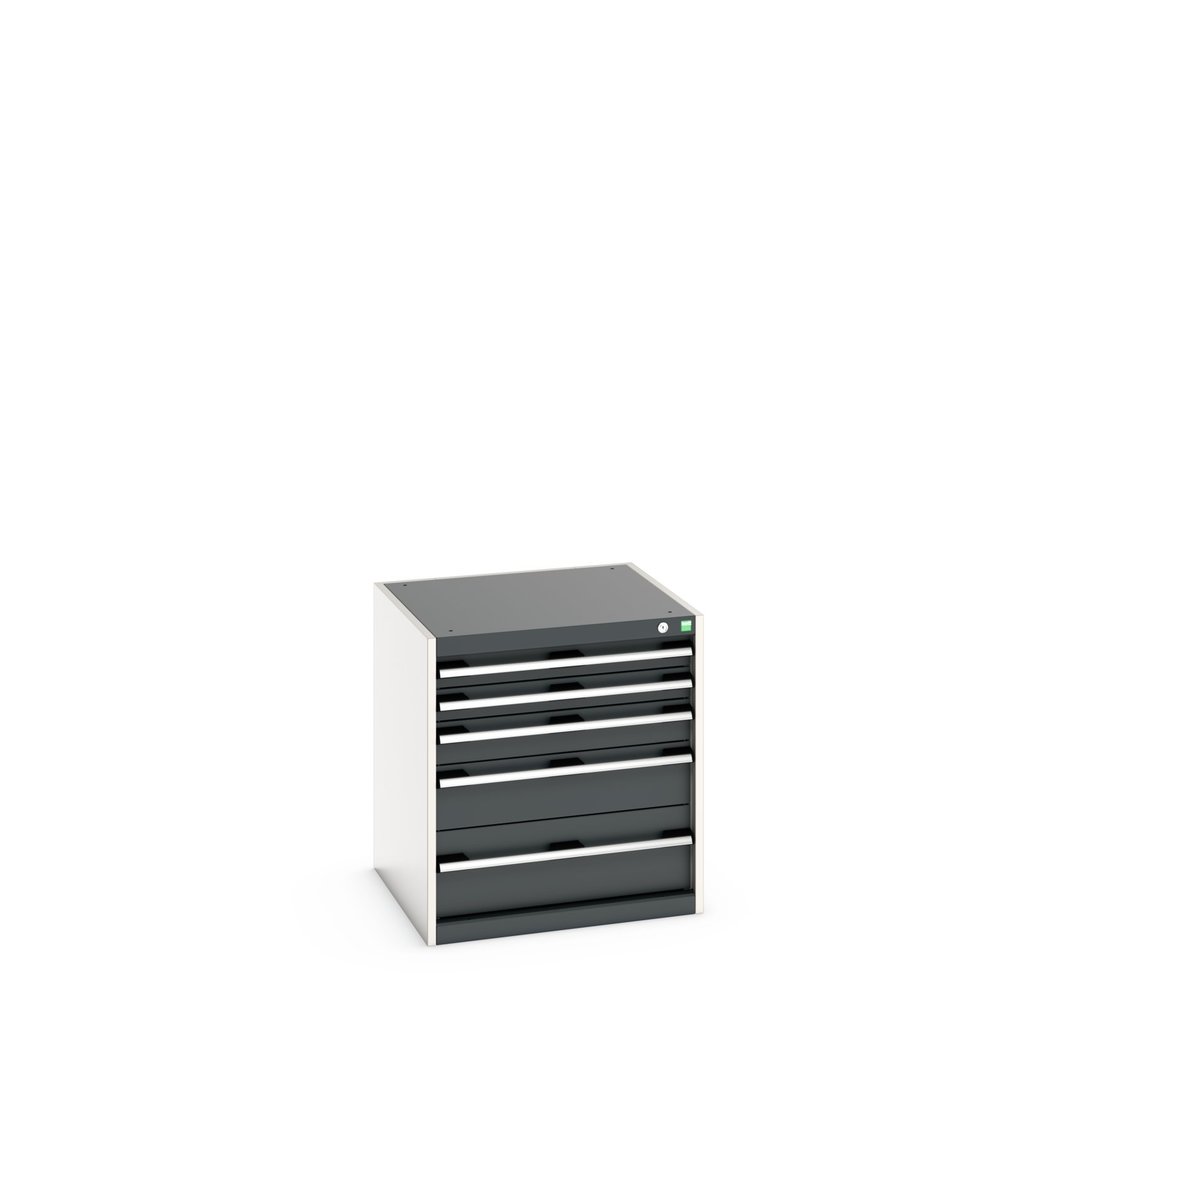 40019027. - cubio drawer cabinet